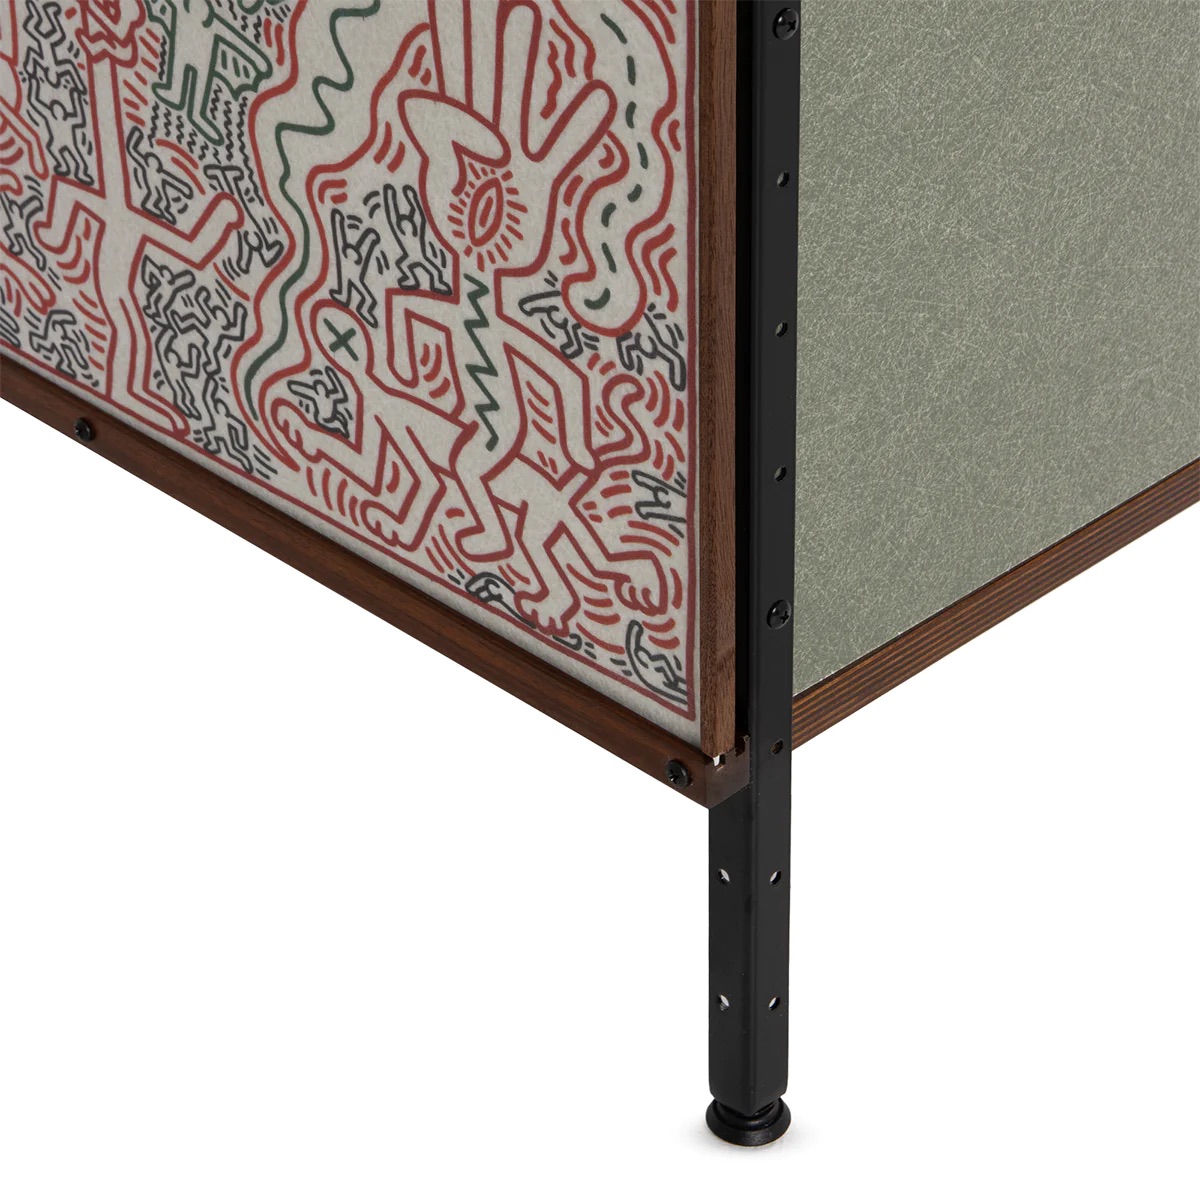 Keith Haring "Untitled, 1983" Display Shelf/Dresser - Image 4 of 4